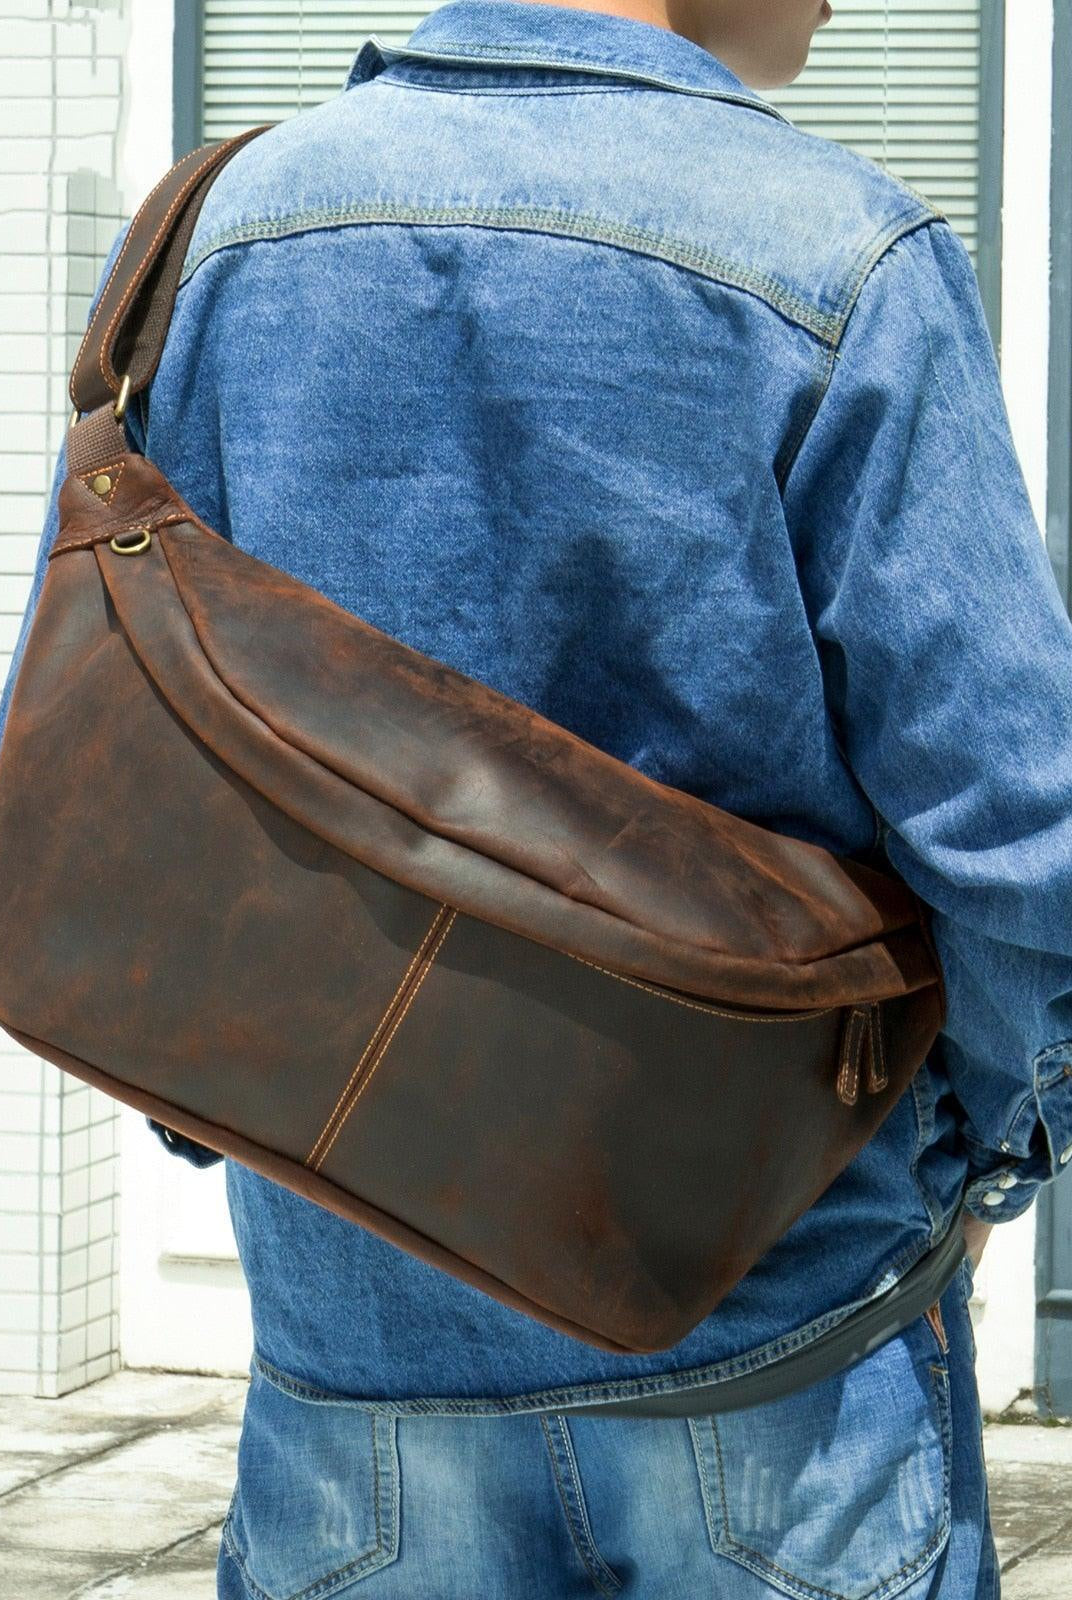 Luggage & Bags - Shoulder/Messenger Bags Vintage Crazy Horse Leather Waist Bag Hands-Free Travel Pouch...